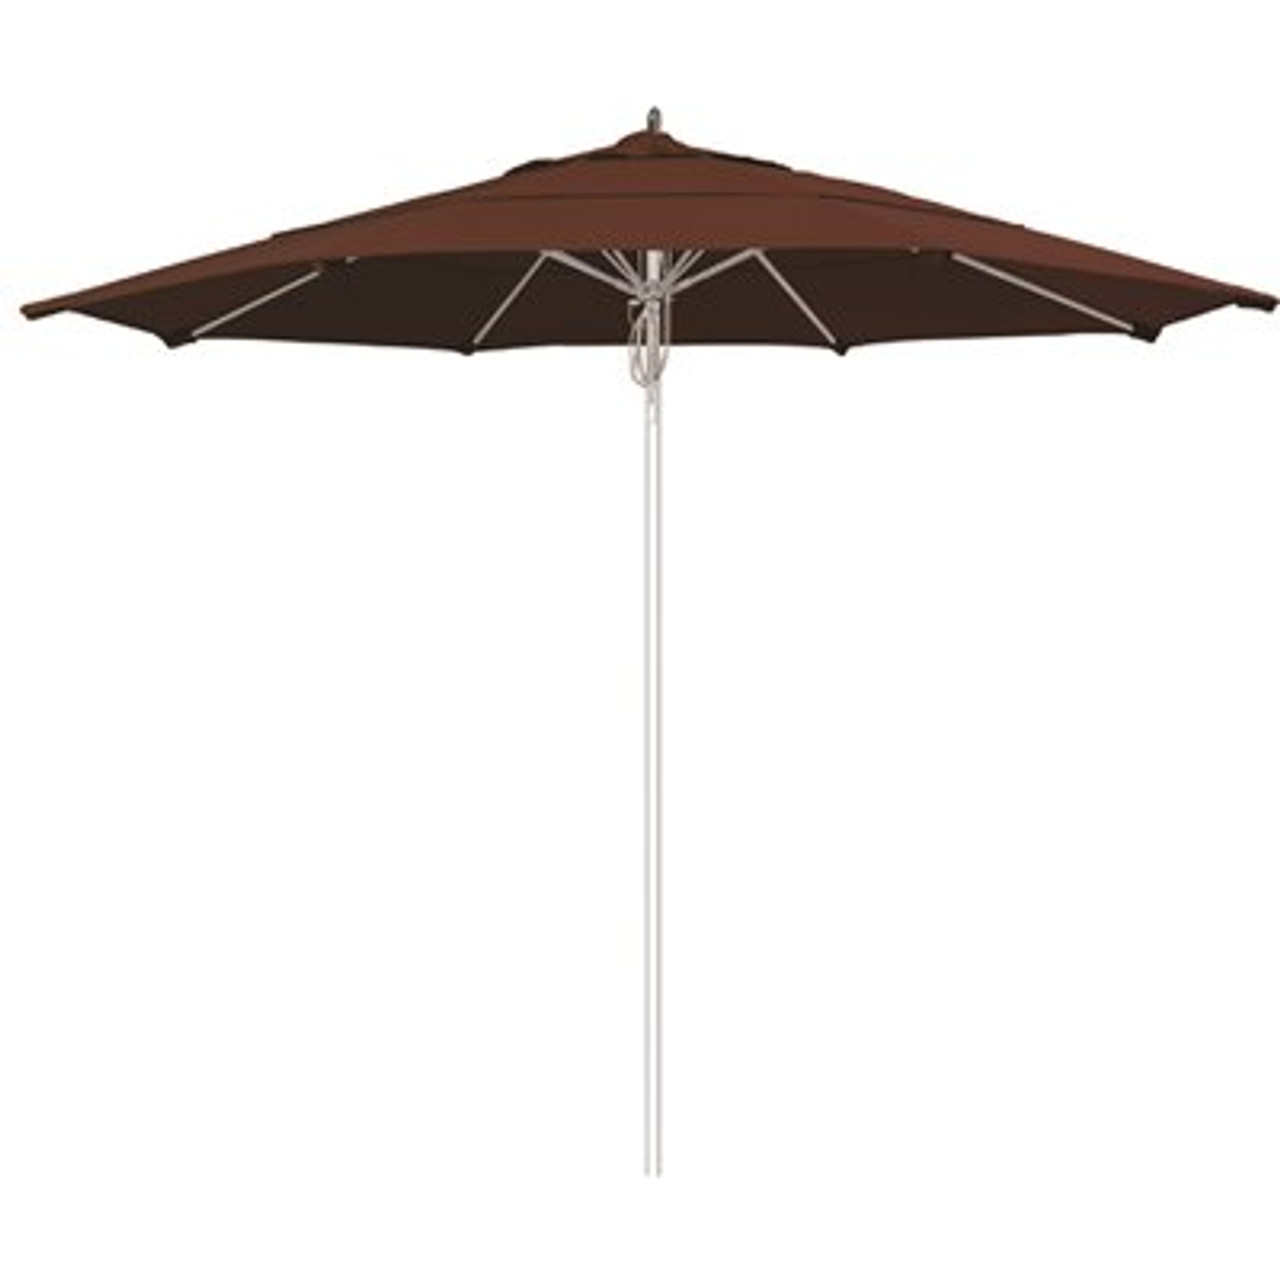 11 ft. Silver Aluminum Commercial Market Patio Umbrella Fiberglass Ribs and Pulley lift in Bay Brown Sunbrella